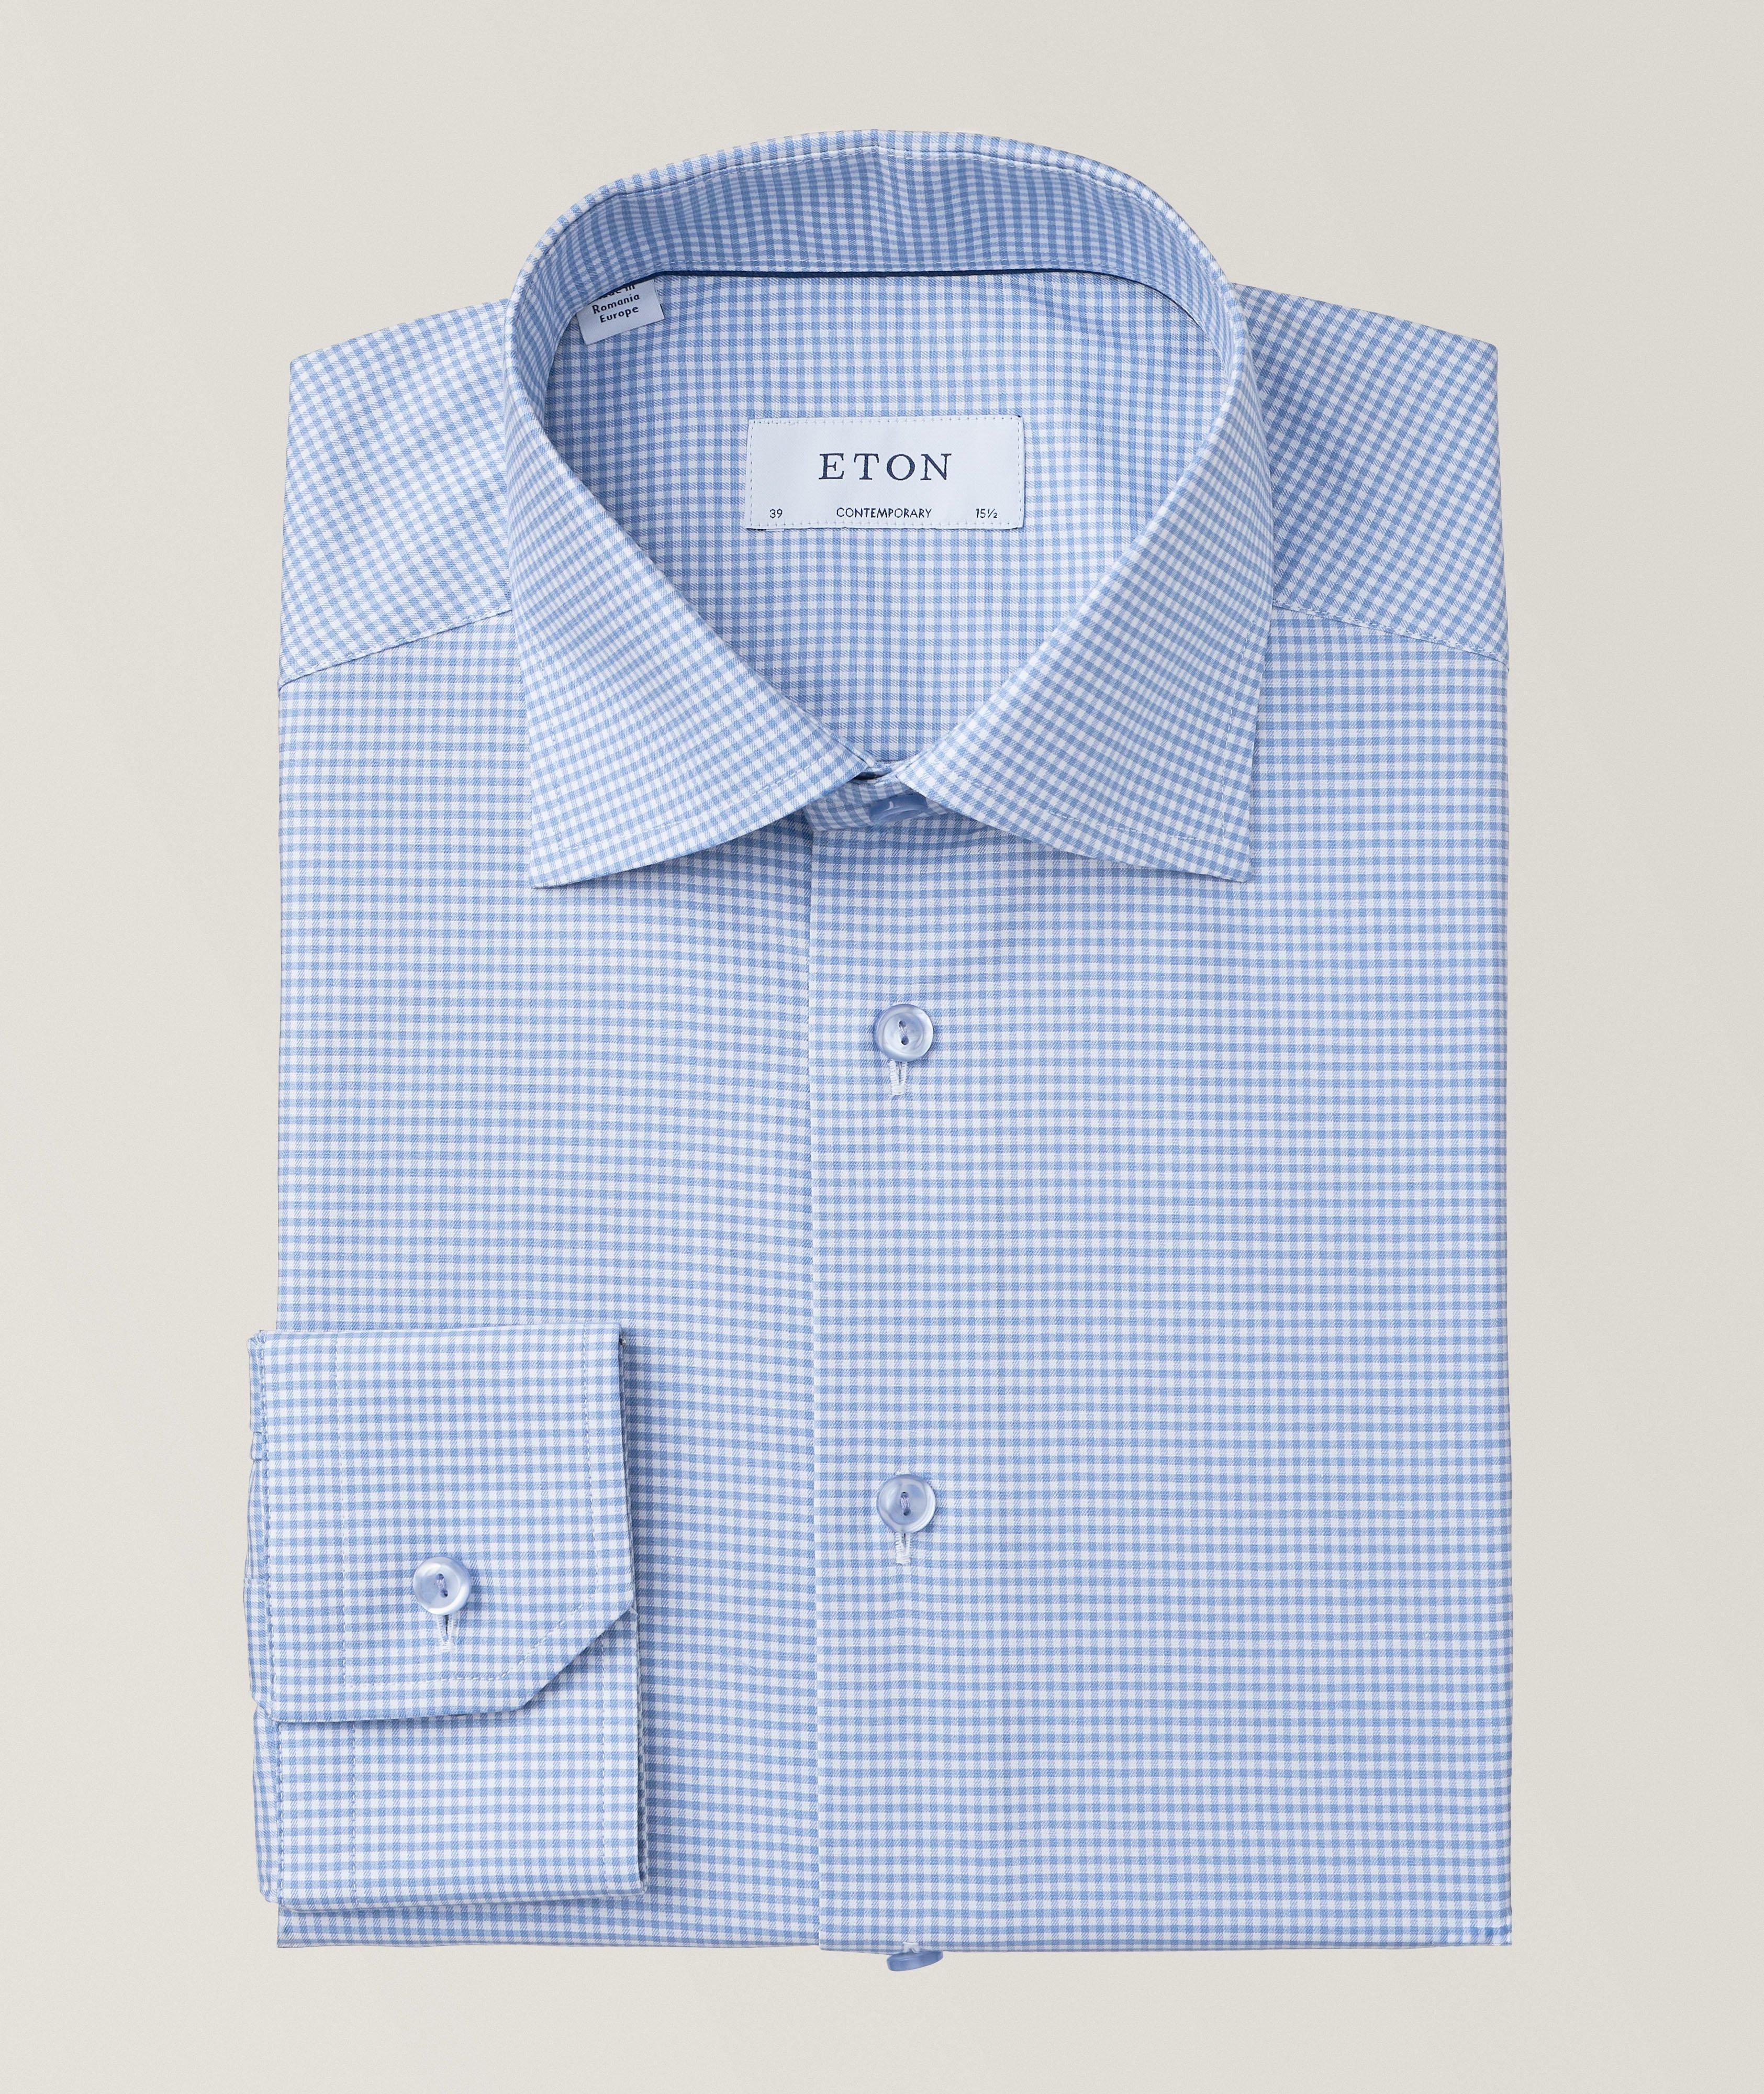 Contemporary Fit Gingham Cotton-Blend Dress Shirt image 0